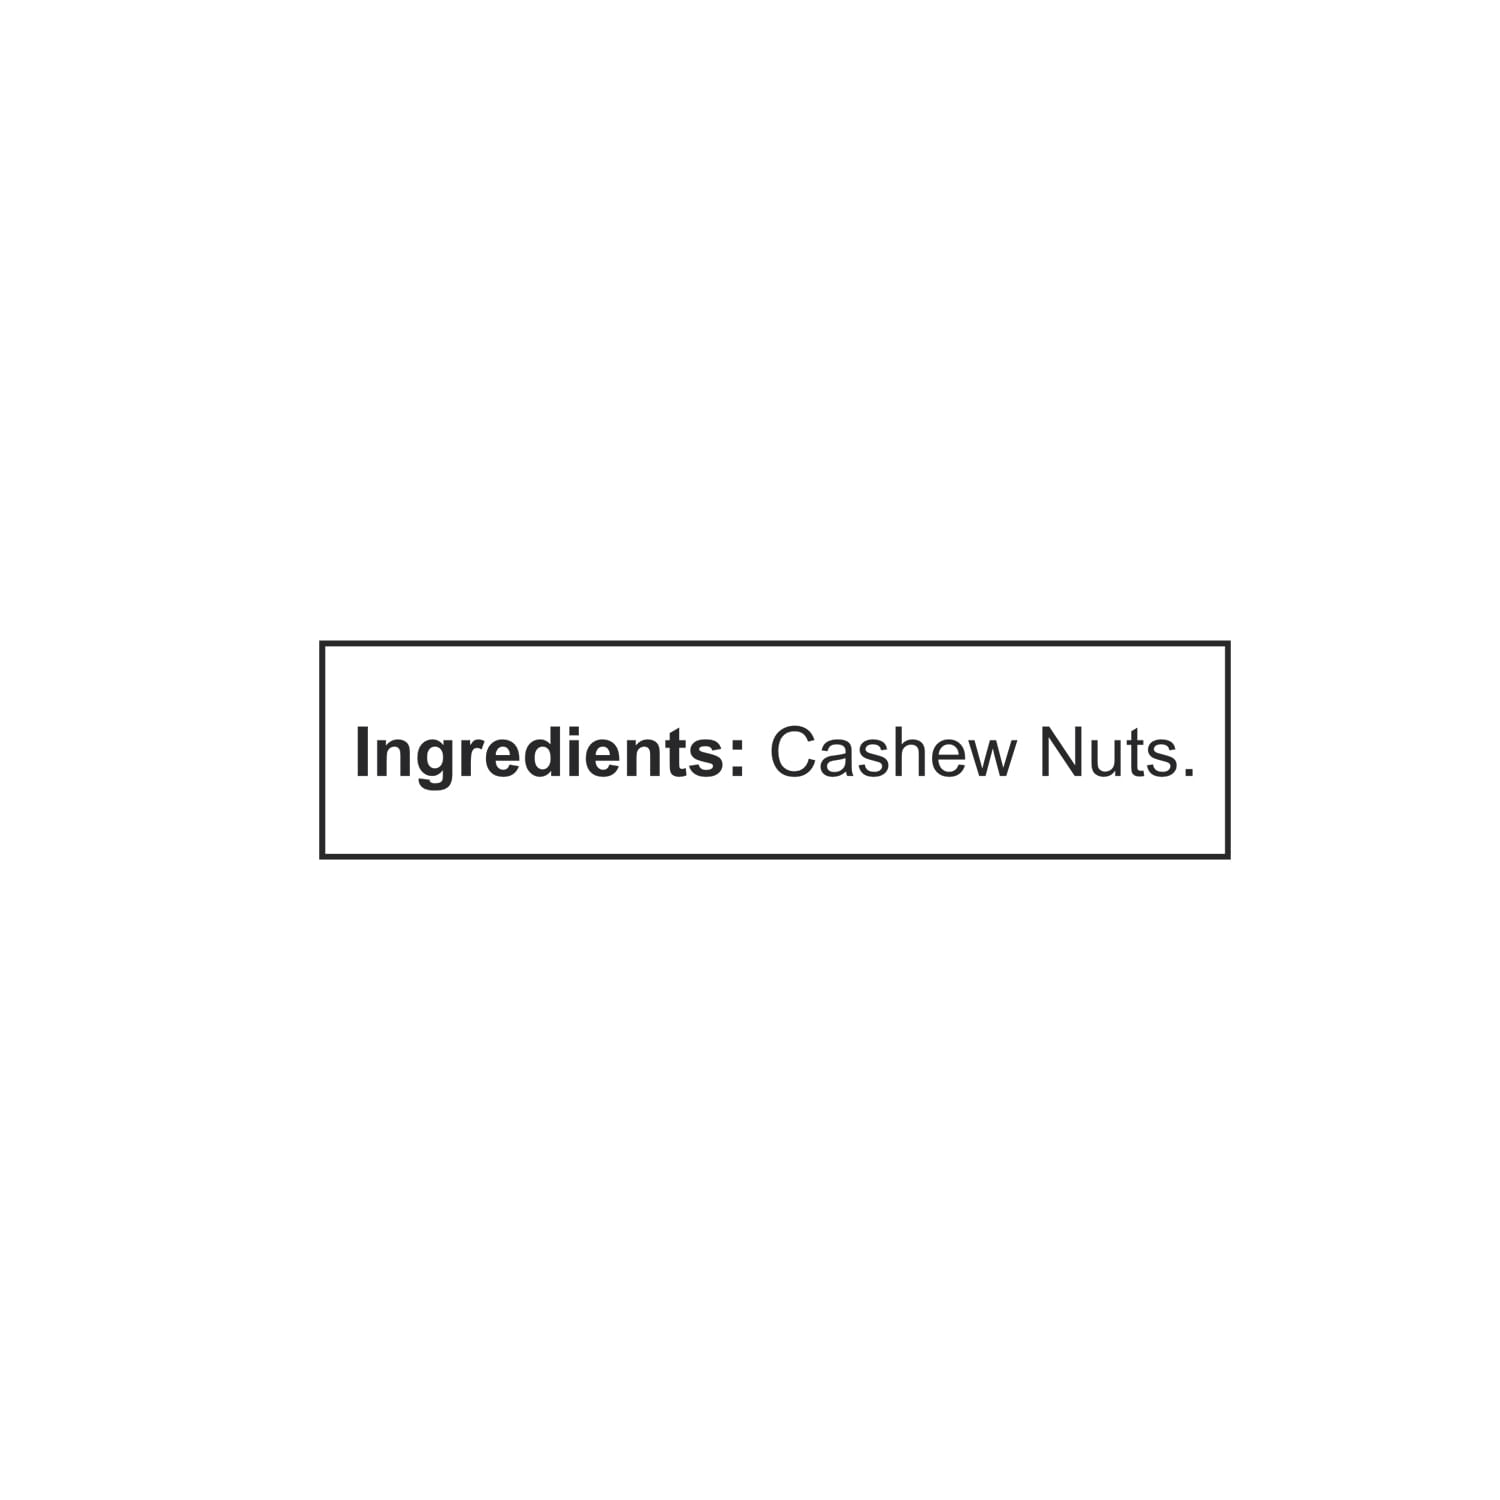 Nutraj Daily Cashew Nuts 1000 gm (2 X 500g)